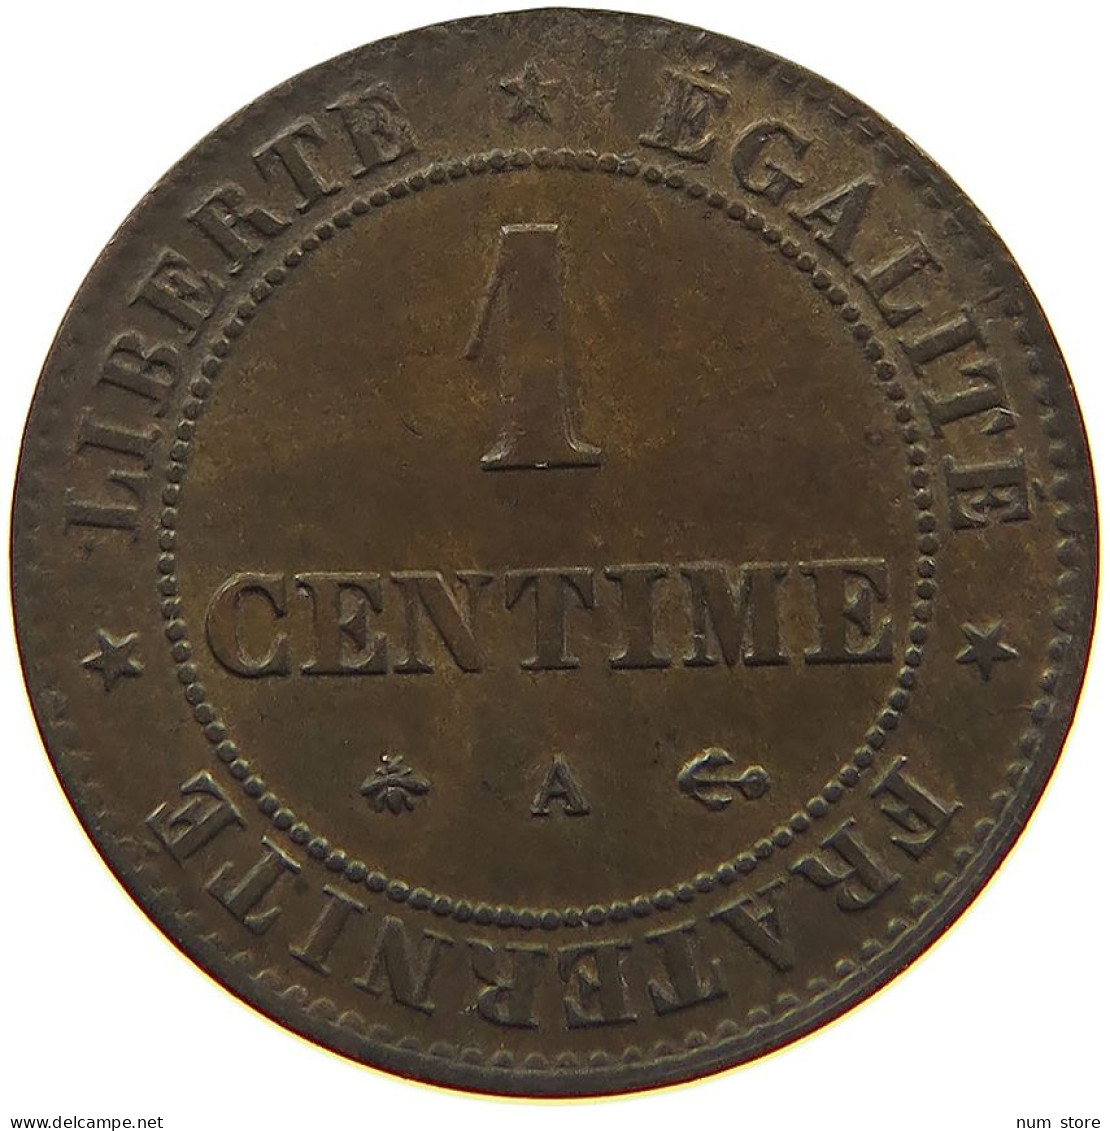 FRANCE CENTIME 1875 A  #t161 0429 - 1 Centime